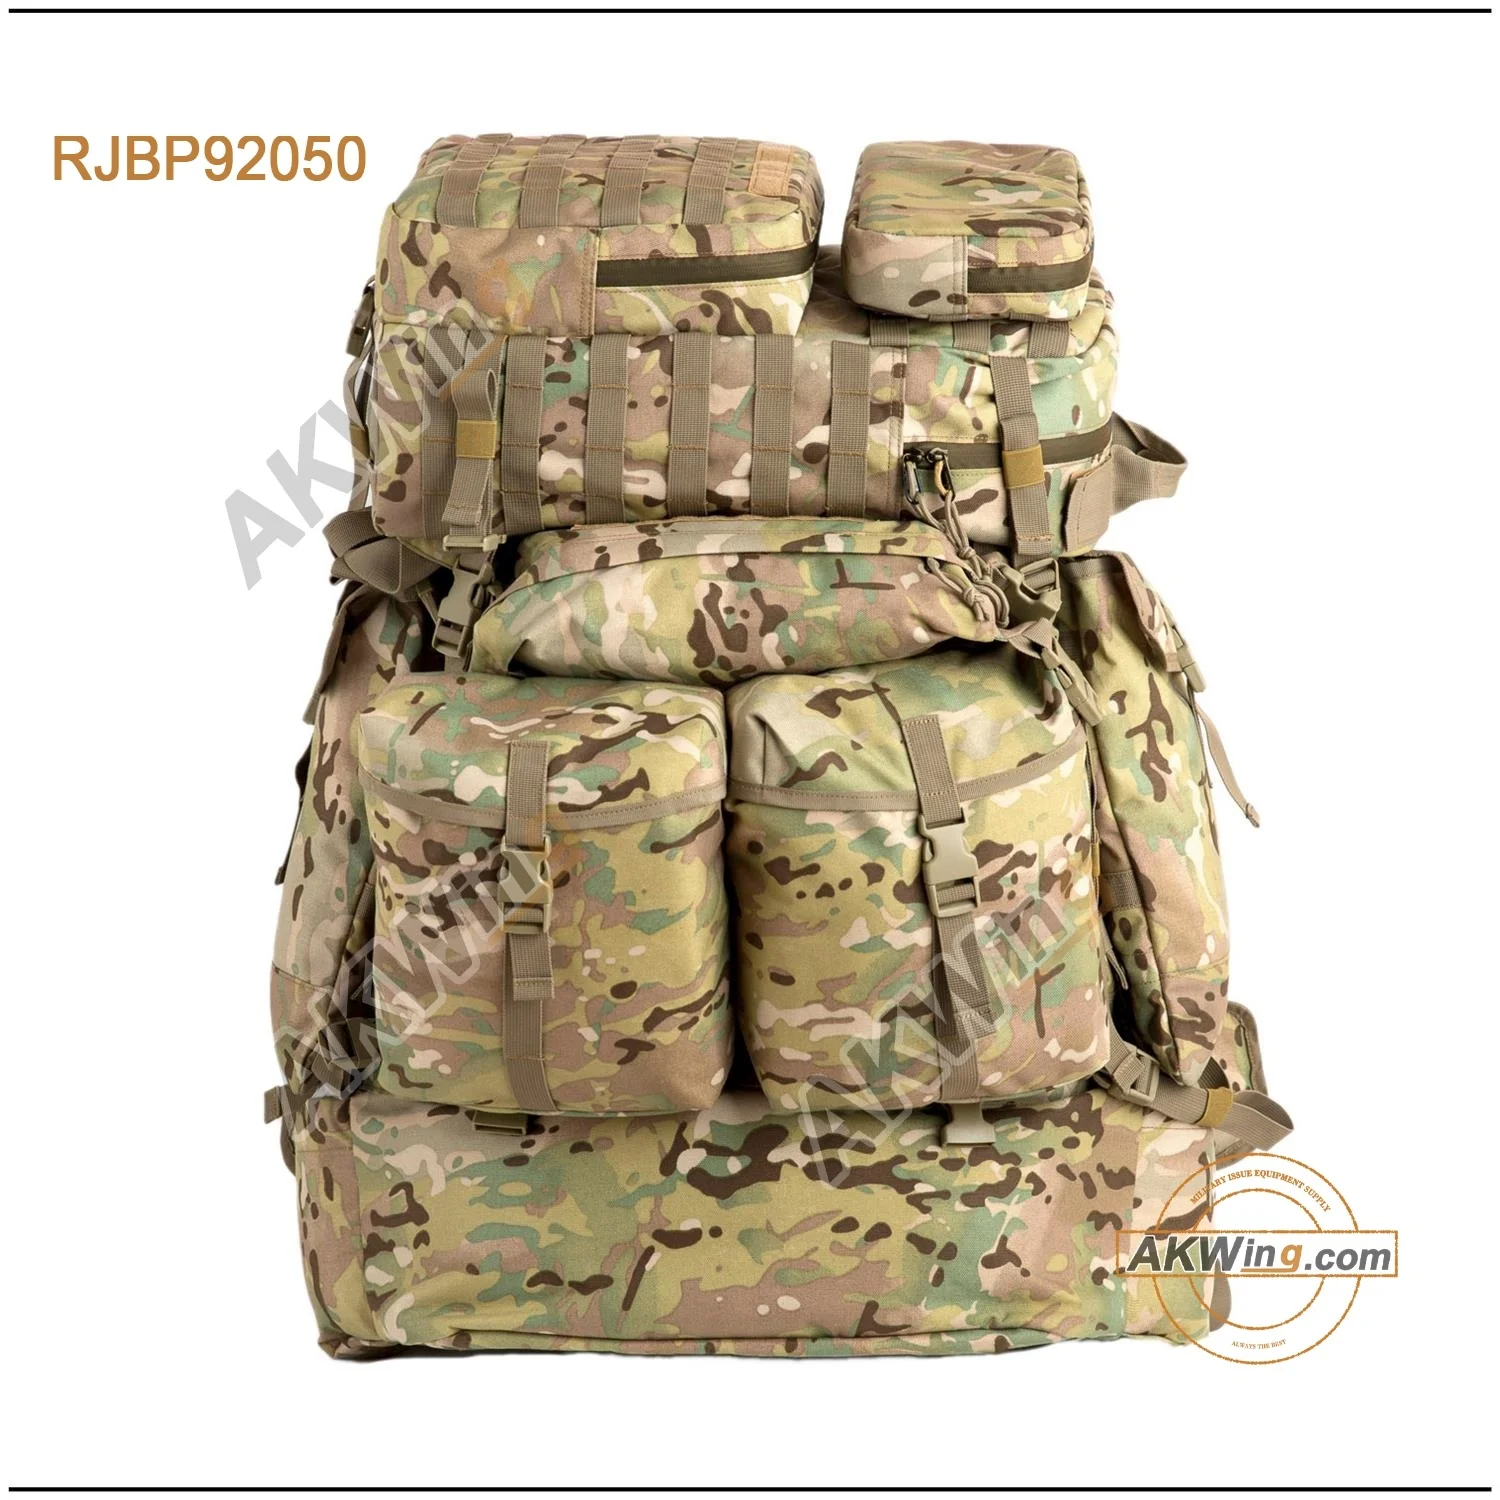 

USGI USMC Pack System FILBE Military Rucksack Tactical Assault Backpack Hydration Pack System with Frame and Hip Belt, Multicam camouflage